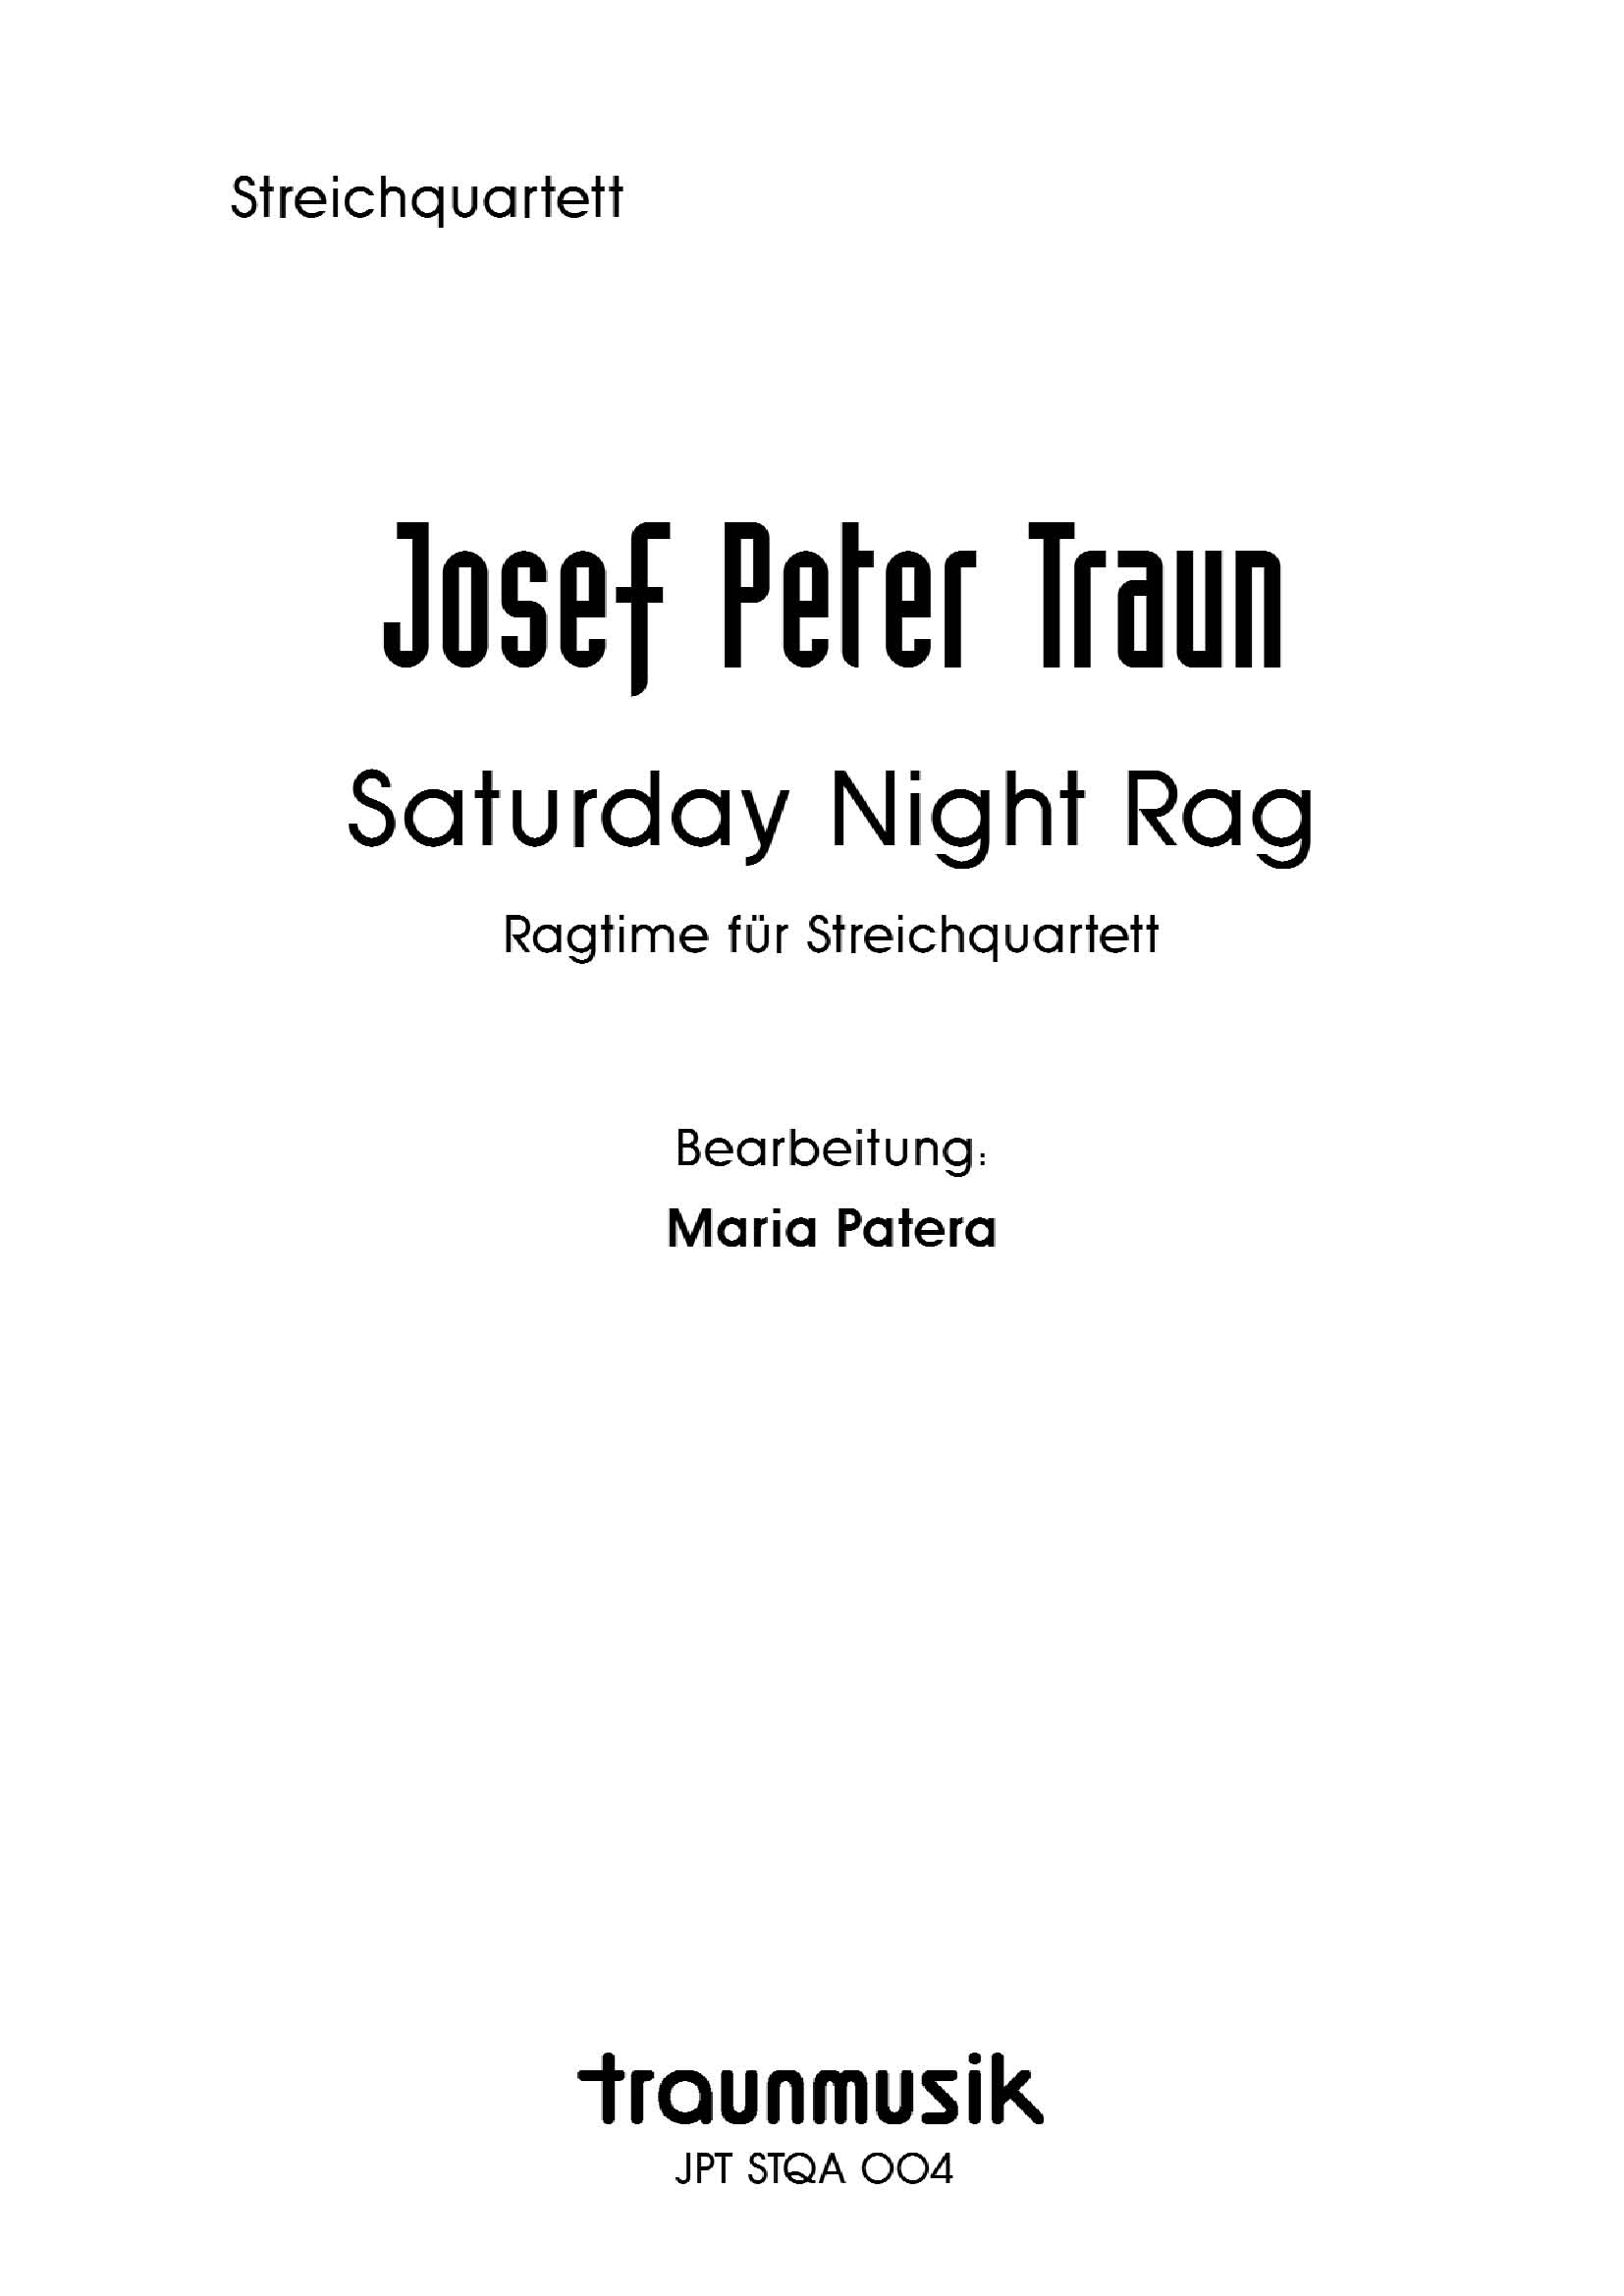 Saturday Night Rag / Josef P. Traun